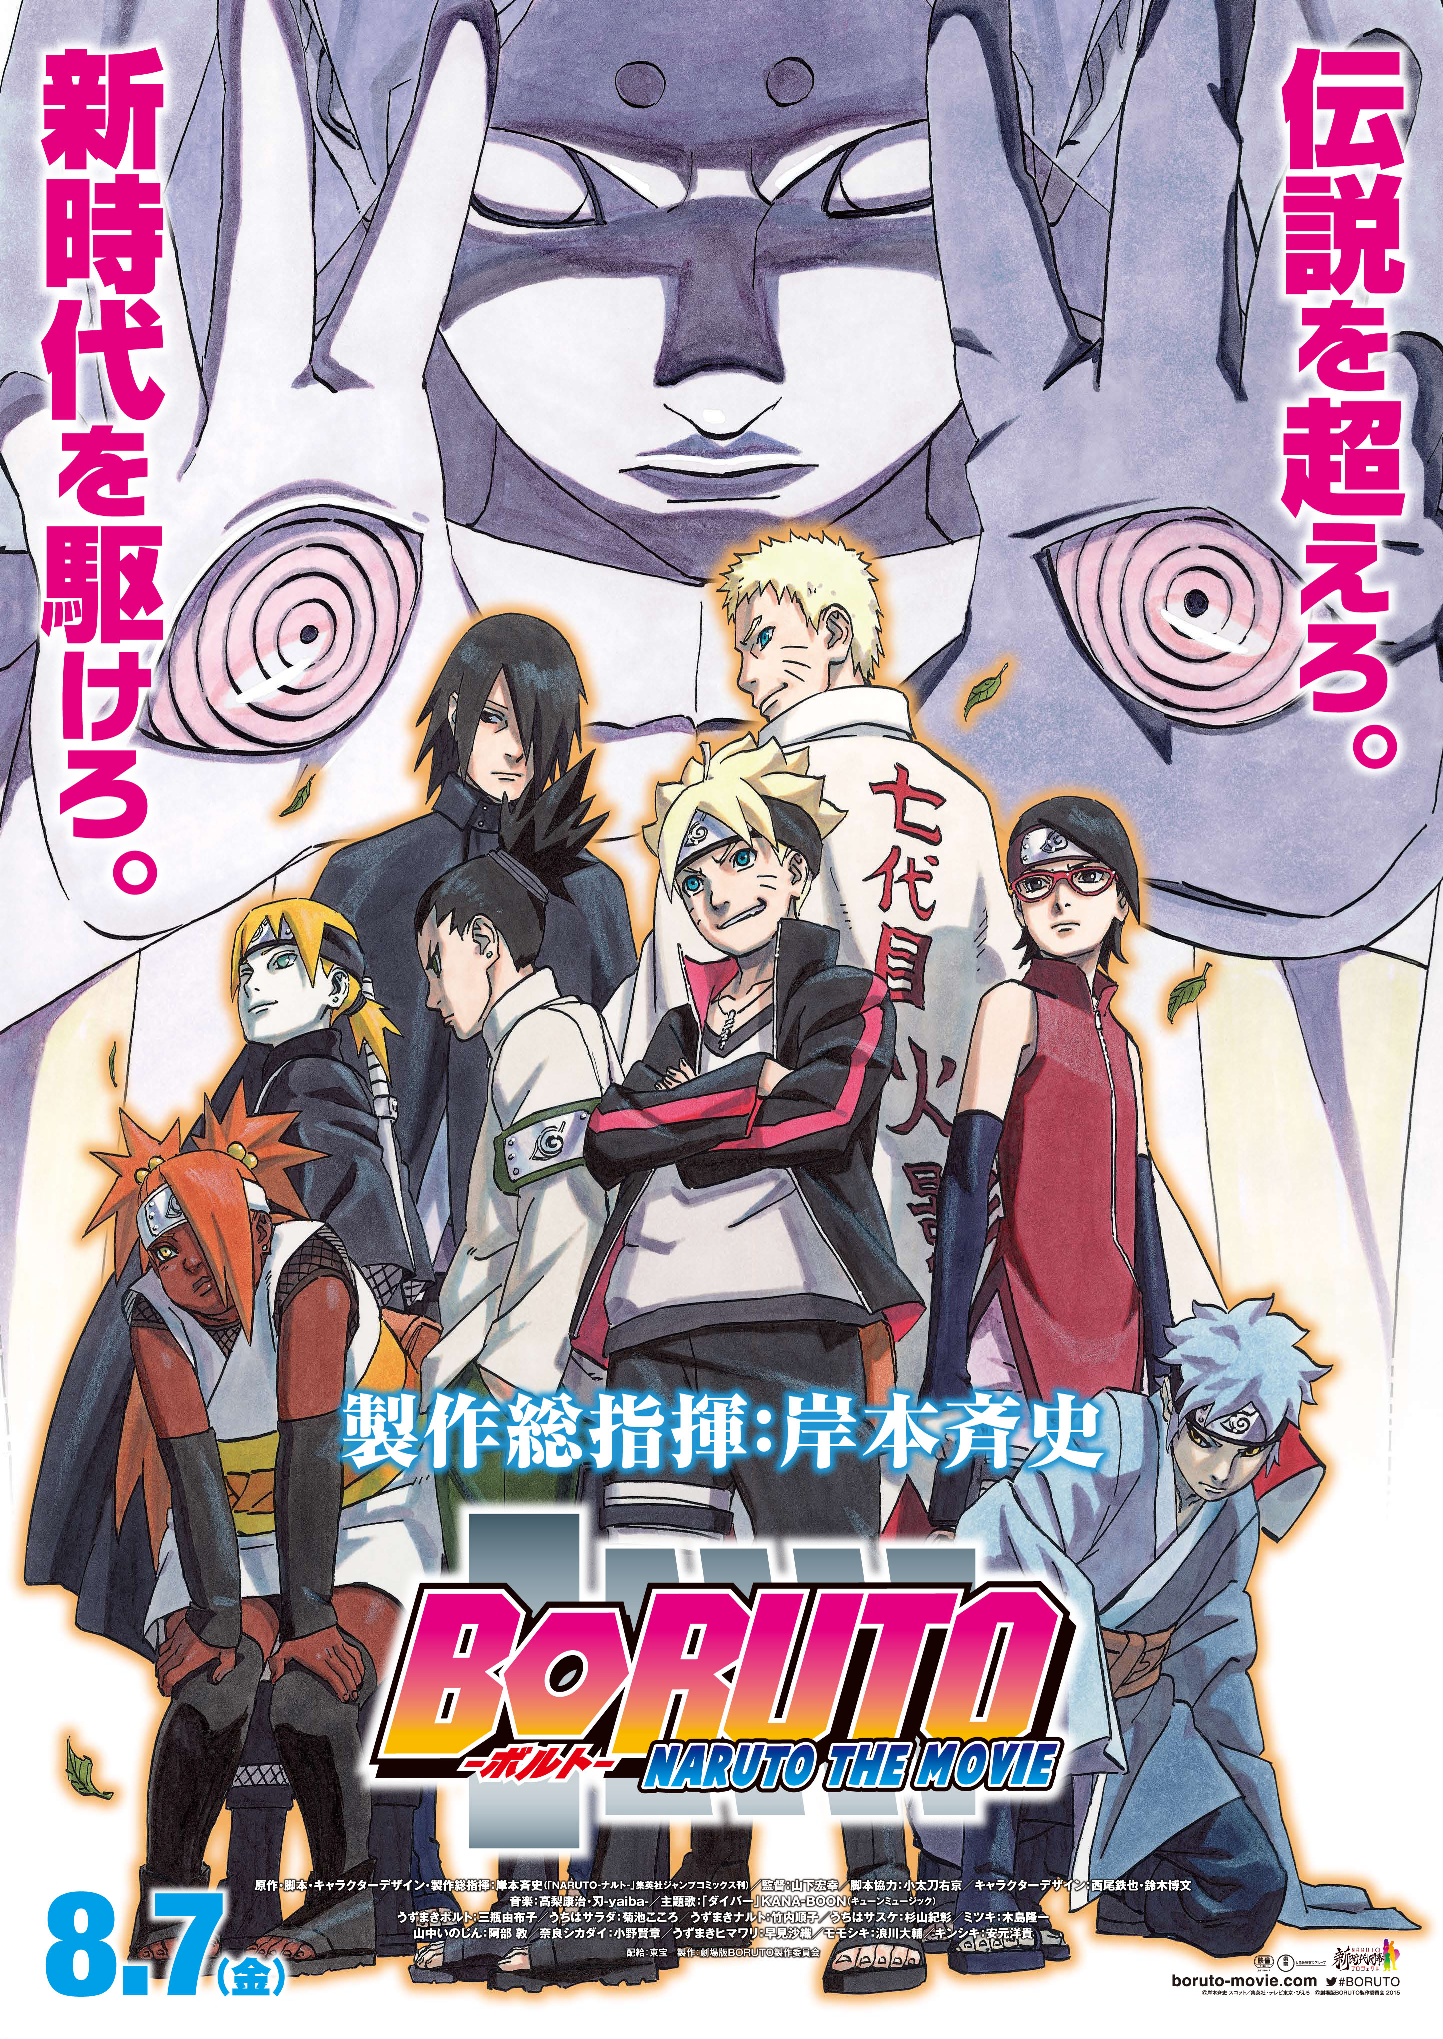 Boruto: Naruto the Movie | Narutopedia | FANDOM powered by Wikia